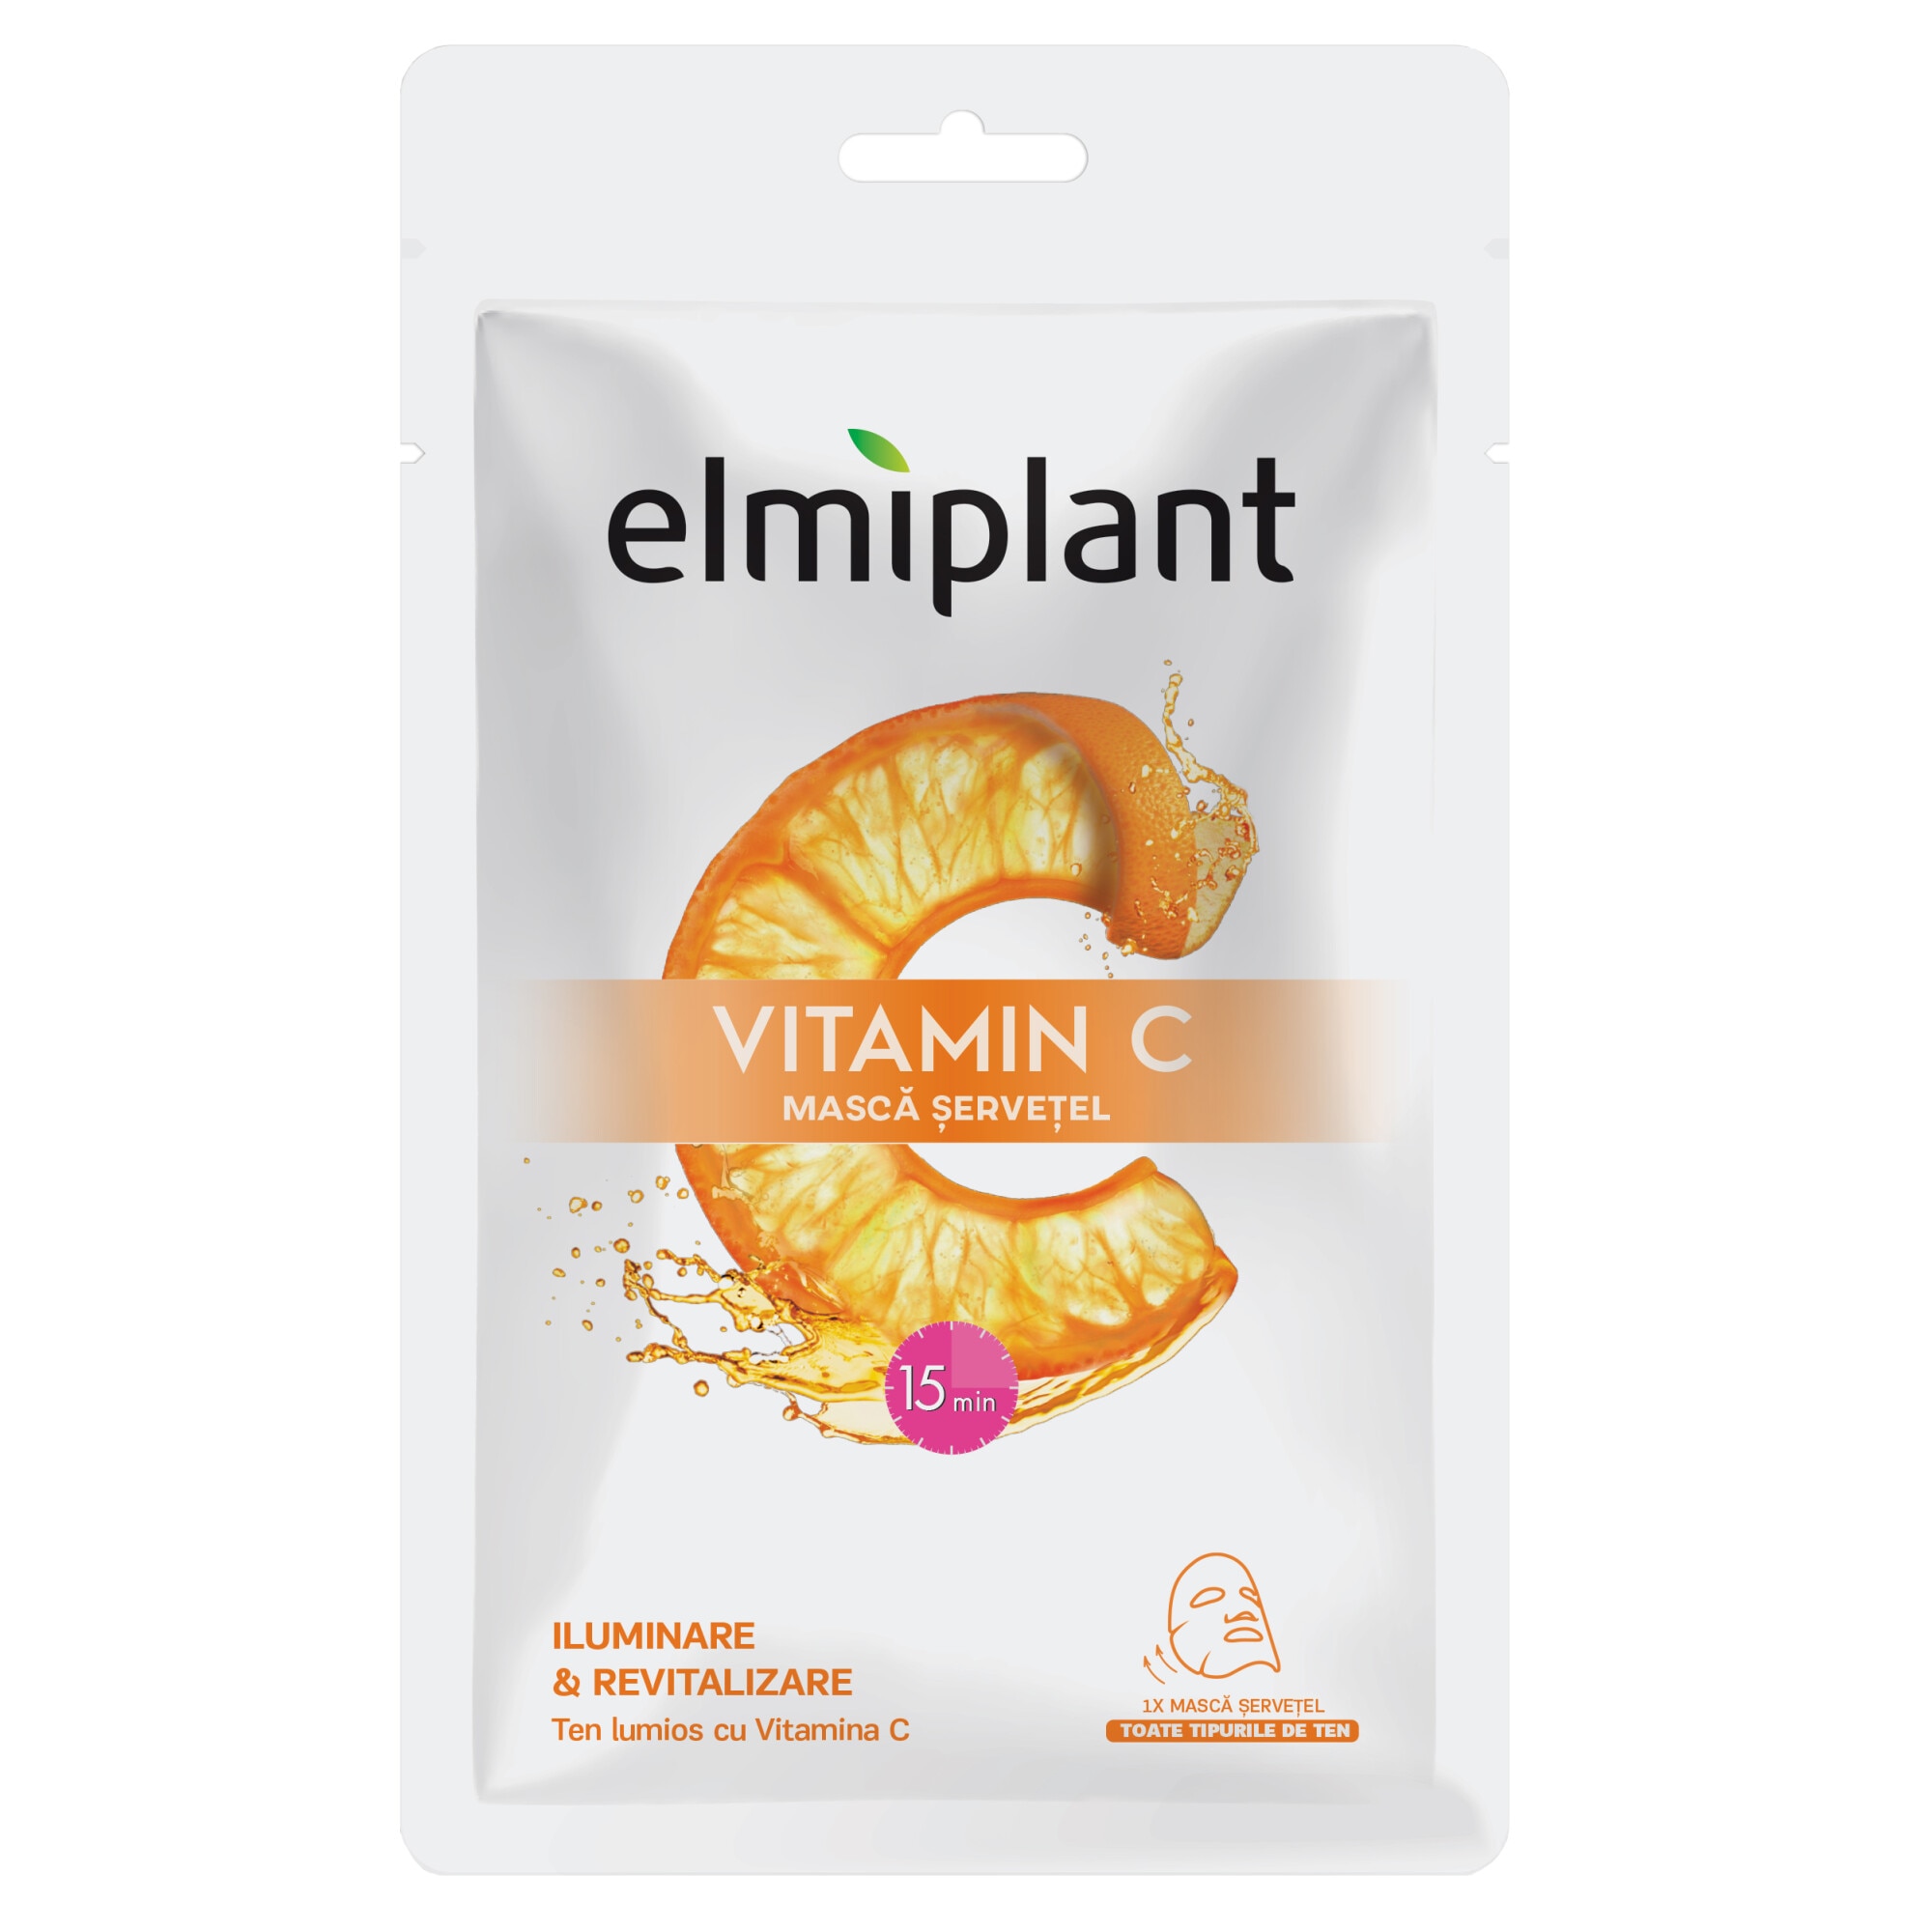 message domain efficiency Masca servetel Elmiplant Vitamin C, pentru iluminare si revitalizare, 20 ml  - eMAG.ro